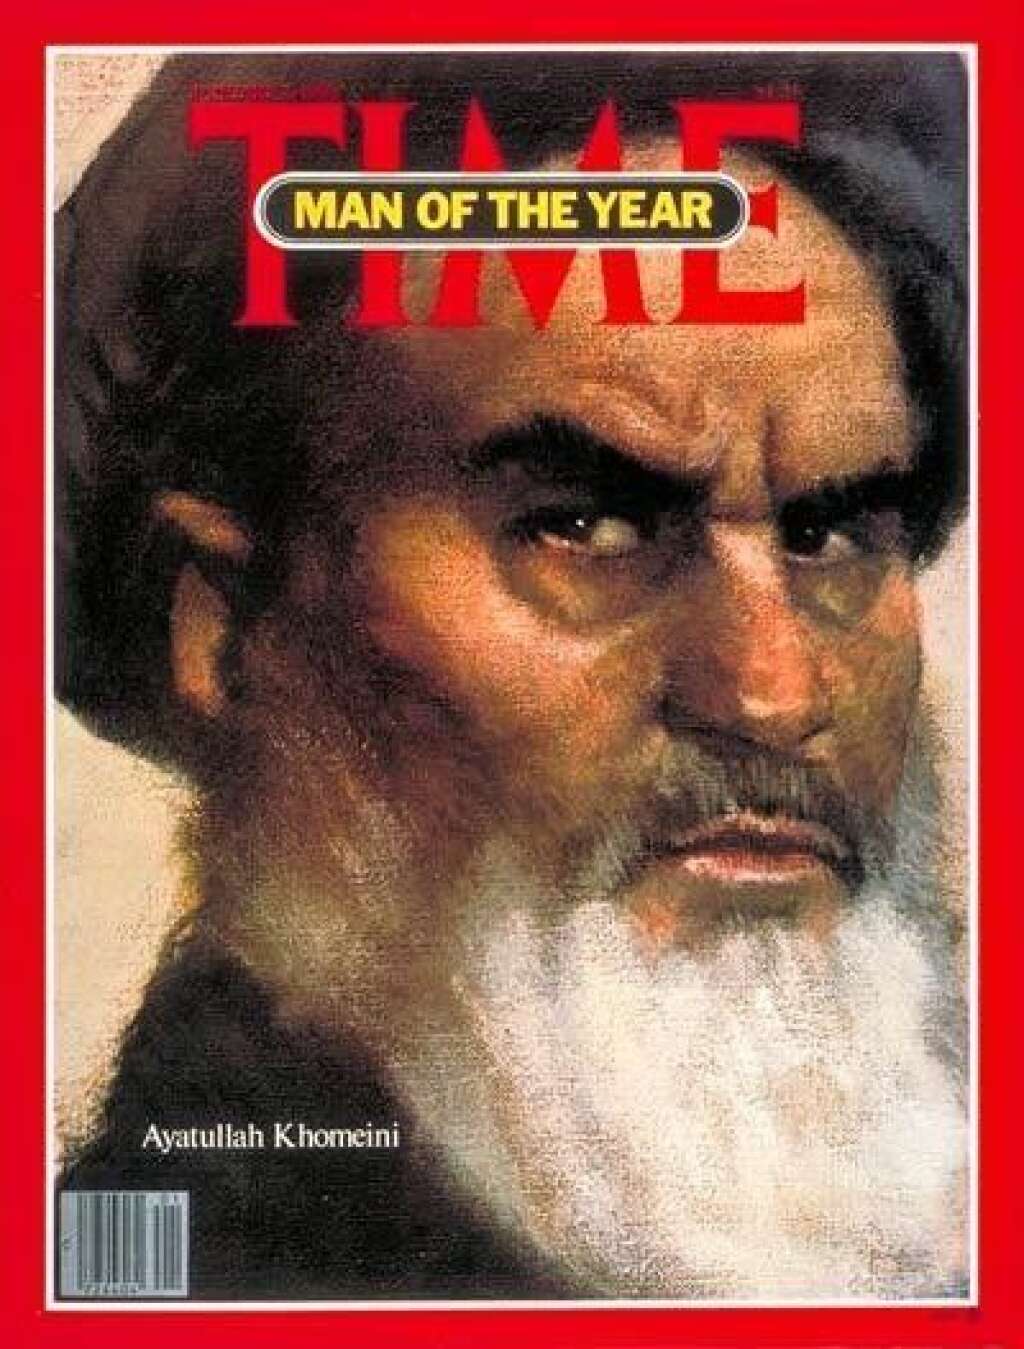 1979 - Ayatullah Khomeini